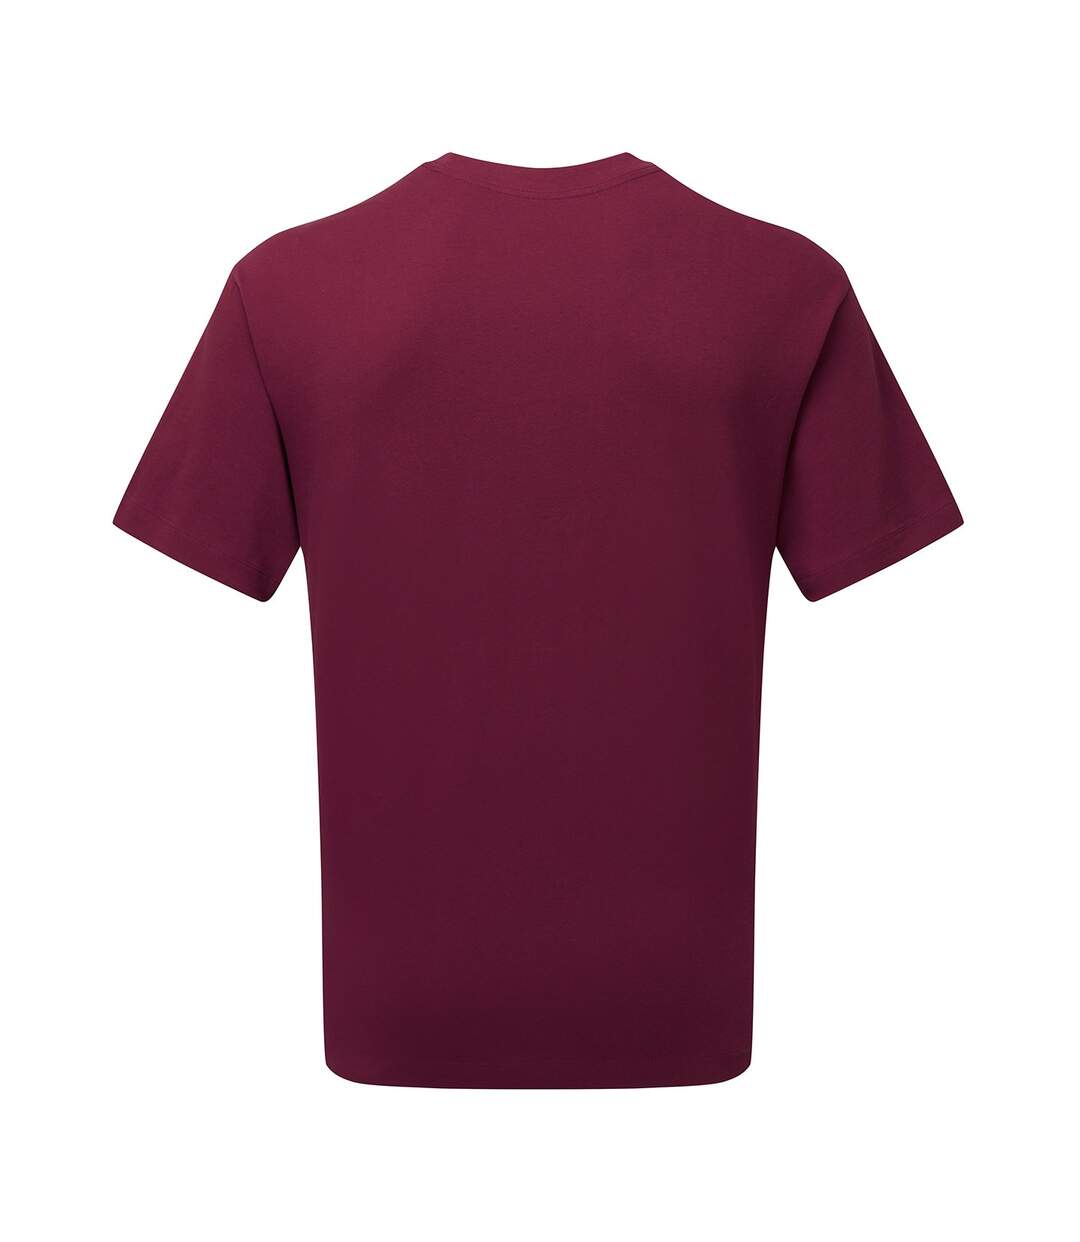 Anthem T-Shirt unisexe adulte poids lourd (Bourgogne) - UTPC4810